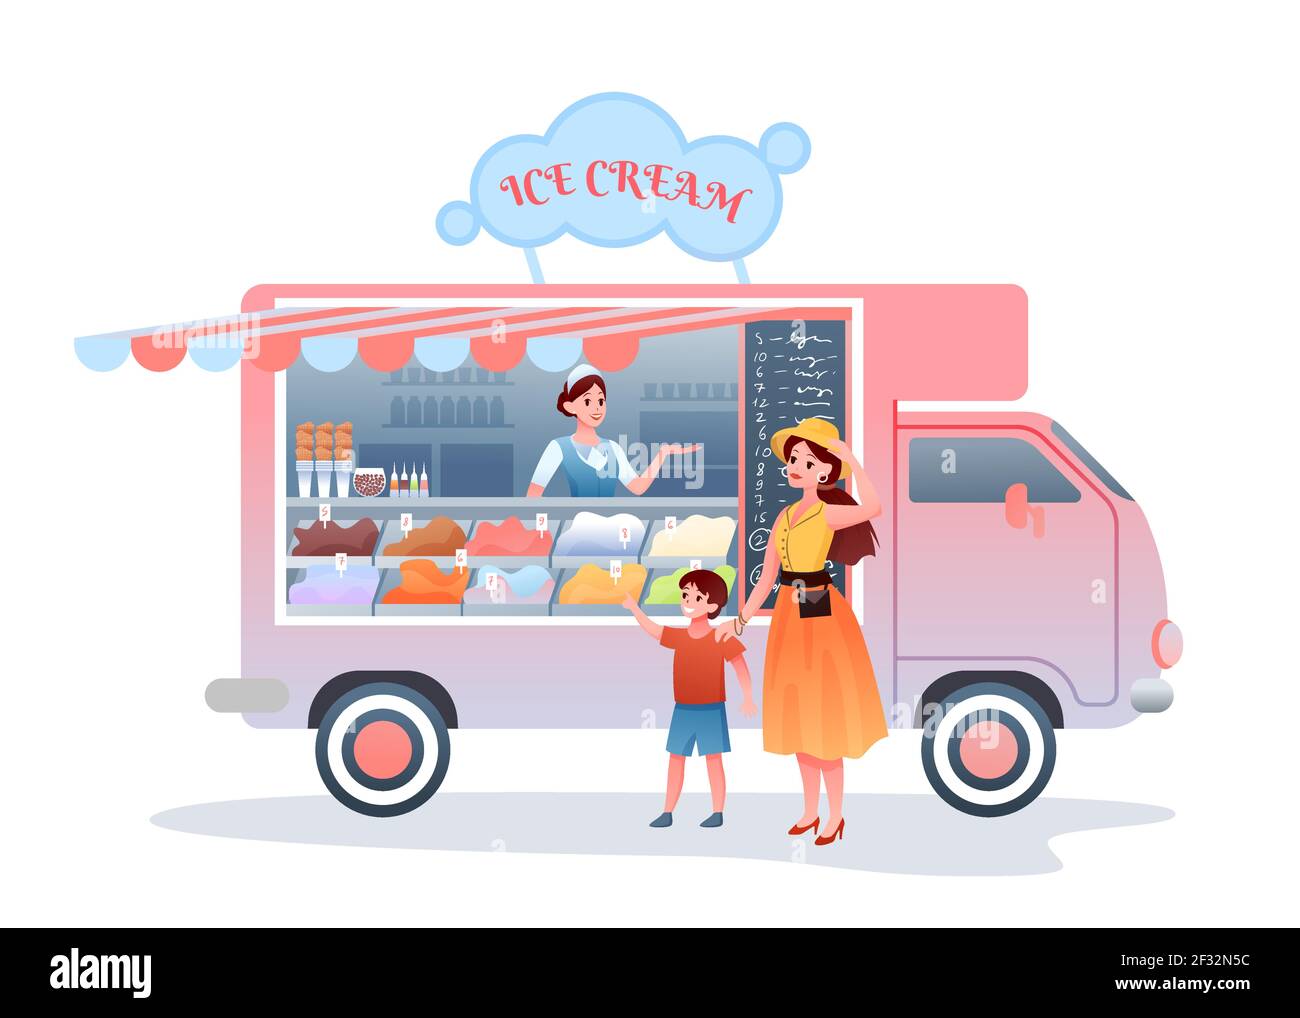 Ice cream street market food truck, mother buying child ice cream in kiosk marketplace Stock Vector